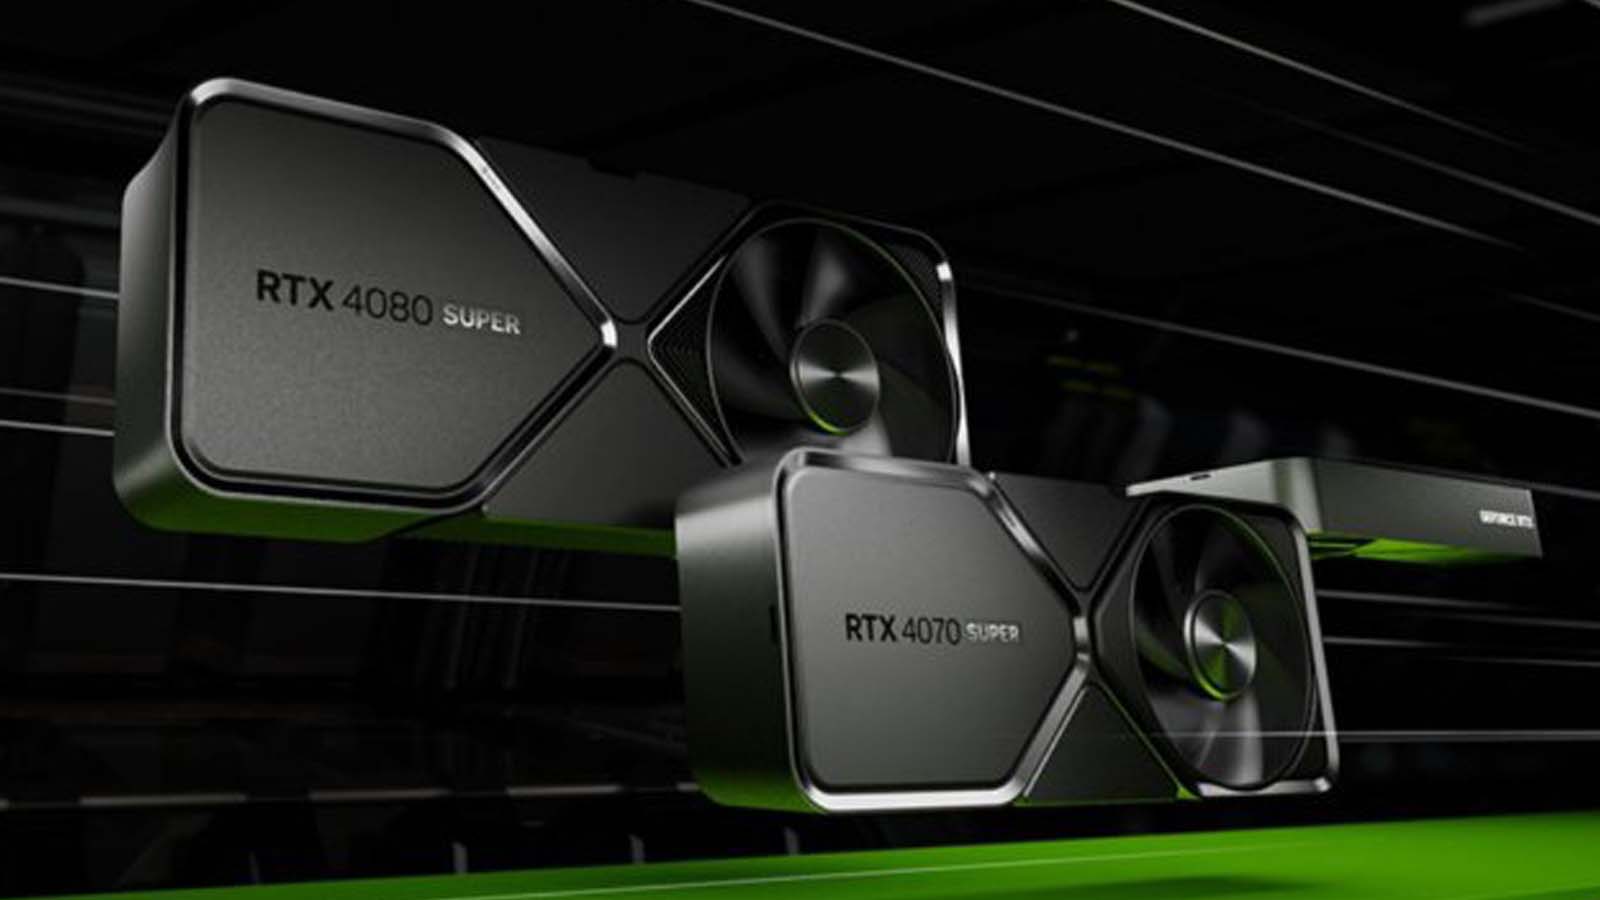 Le ultime offerte di schede video Nvidia per prestazioni eccezionali